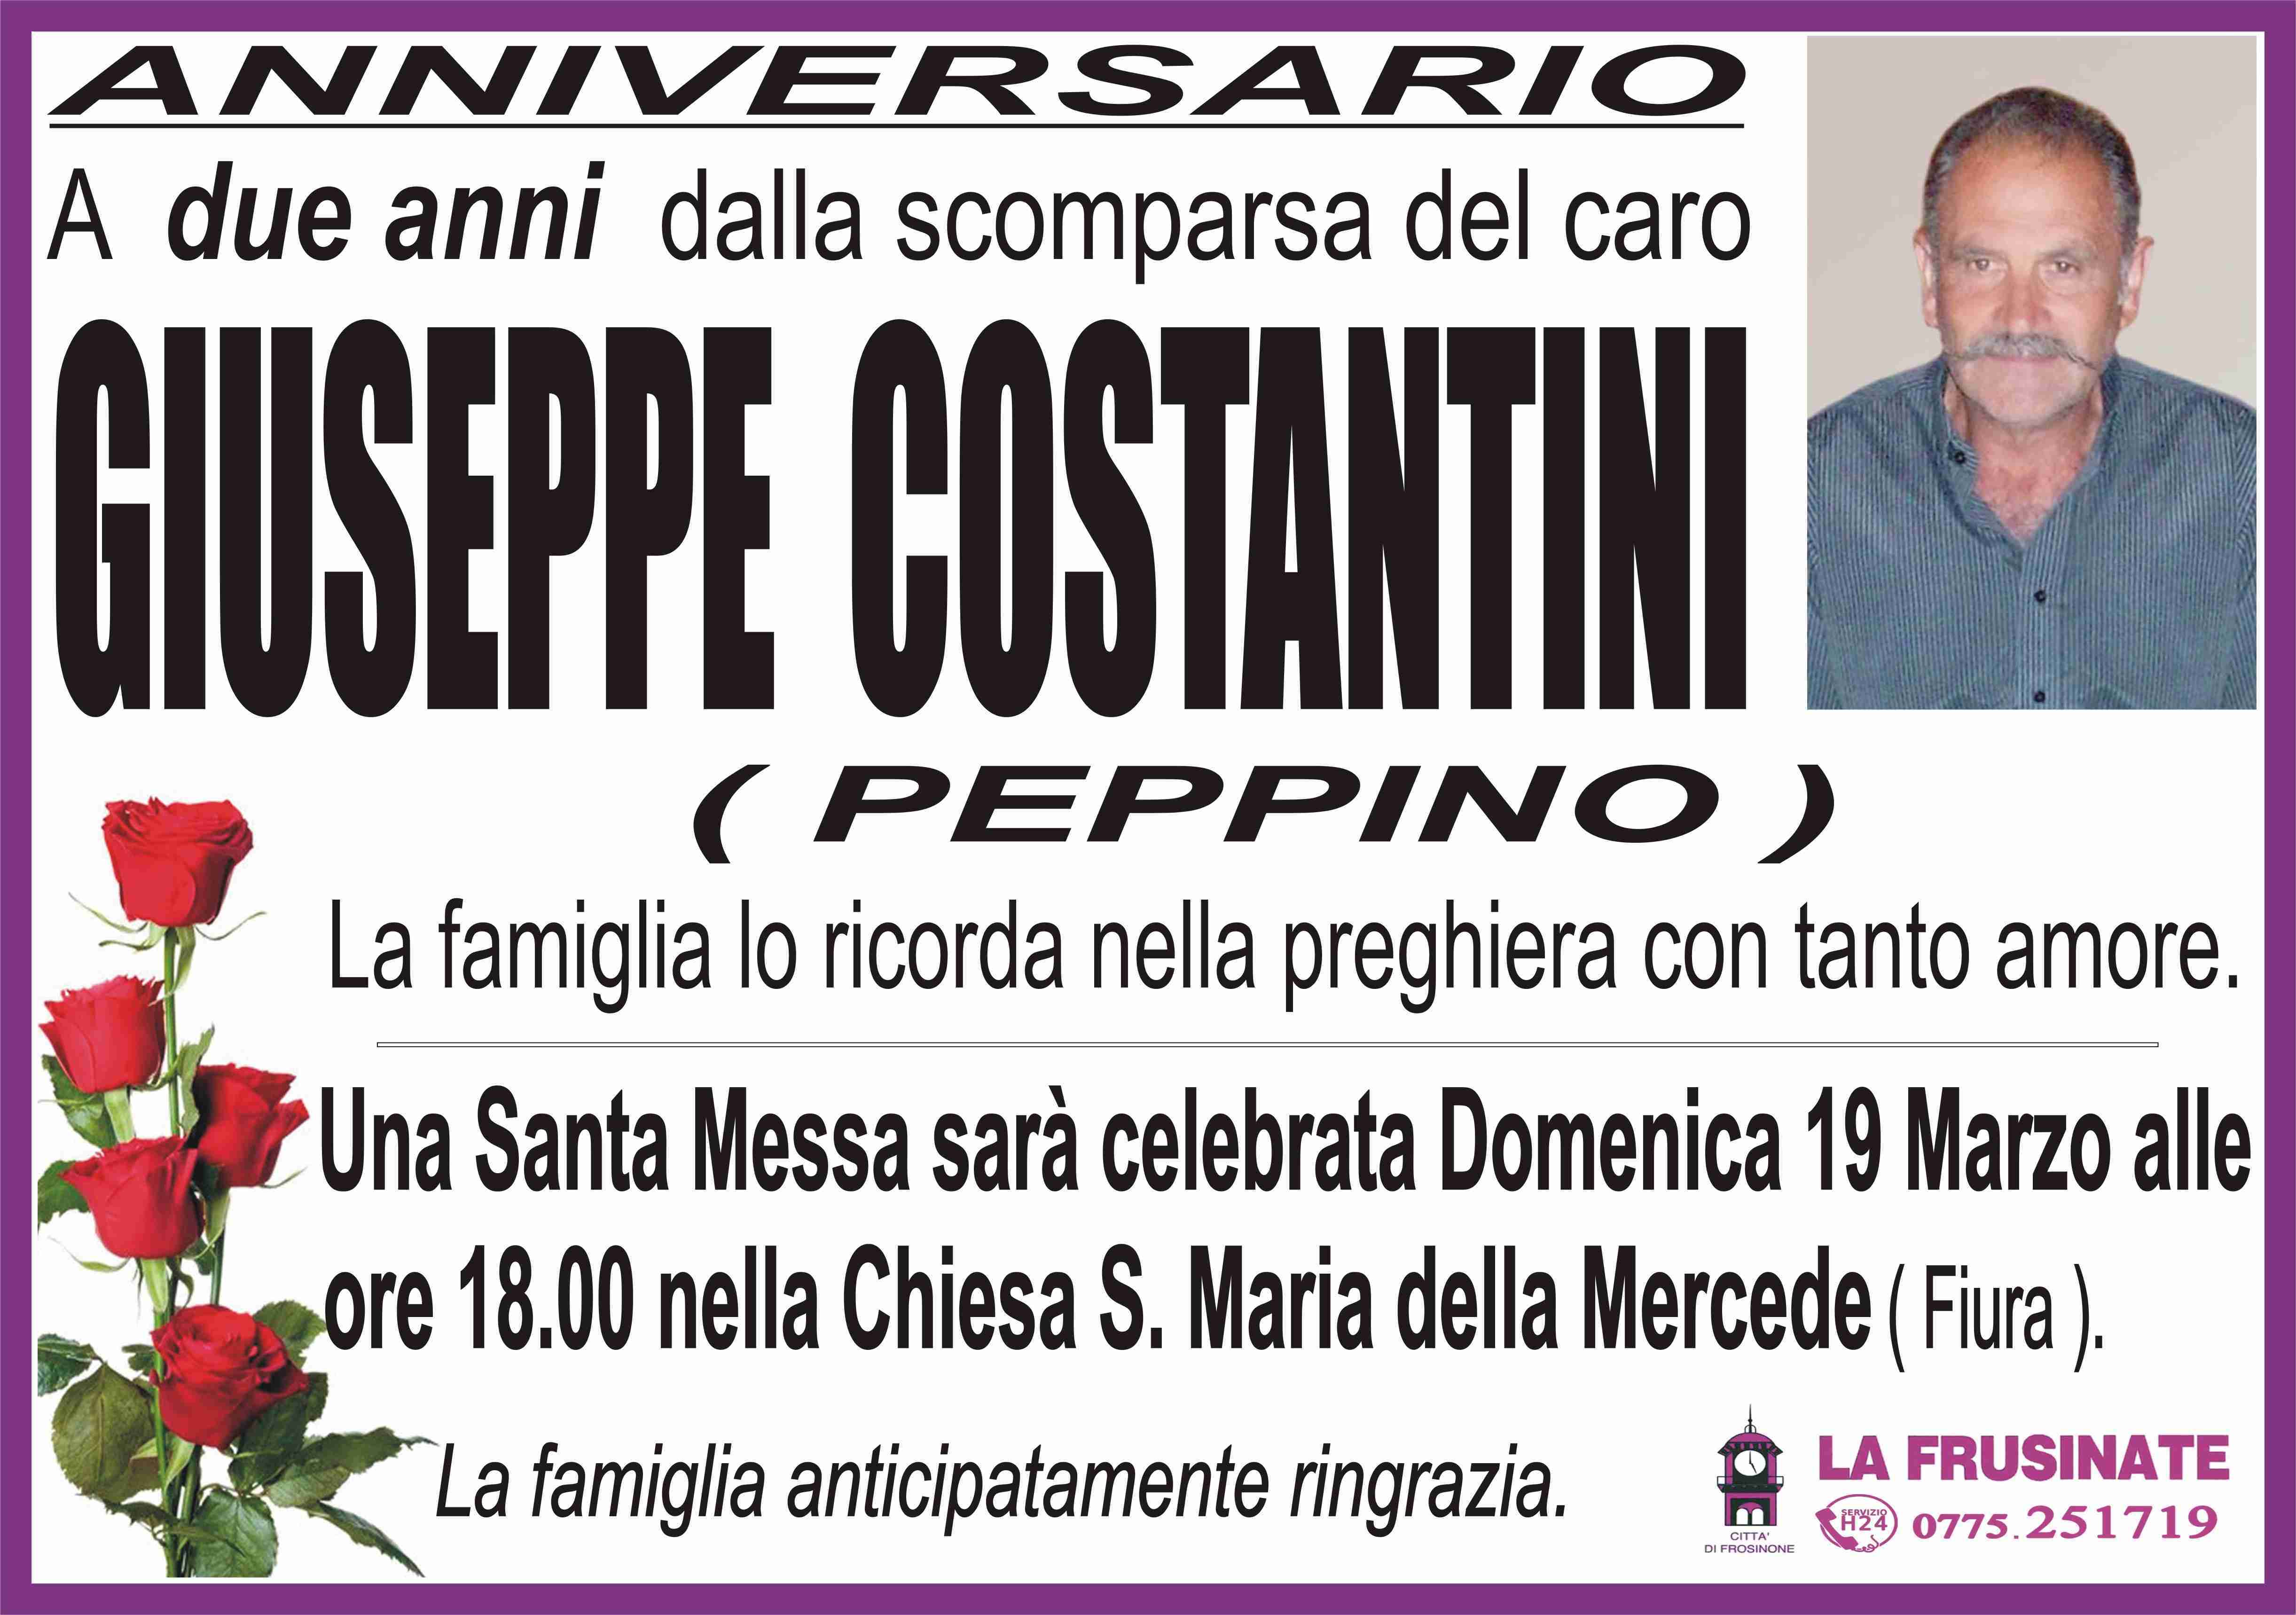 Giuseppe Costantini